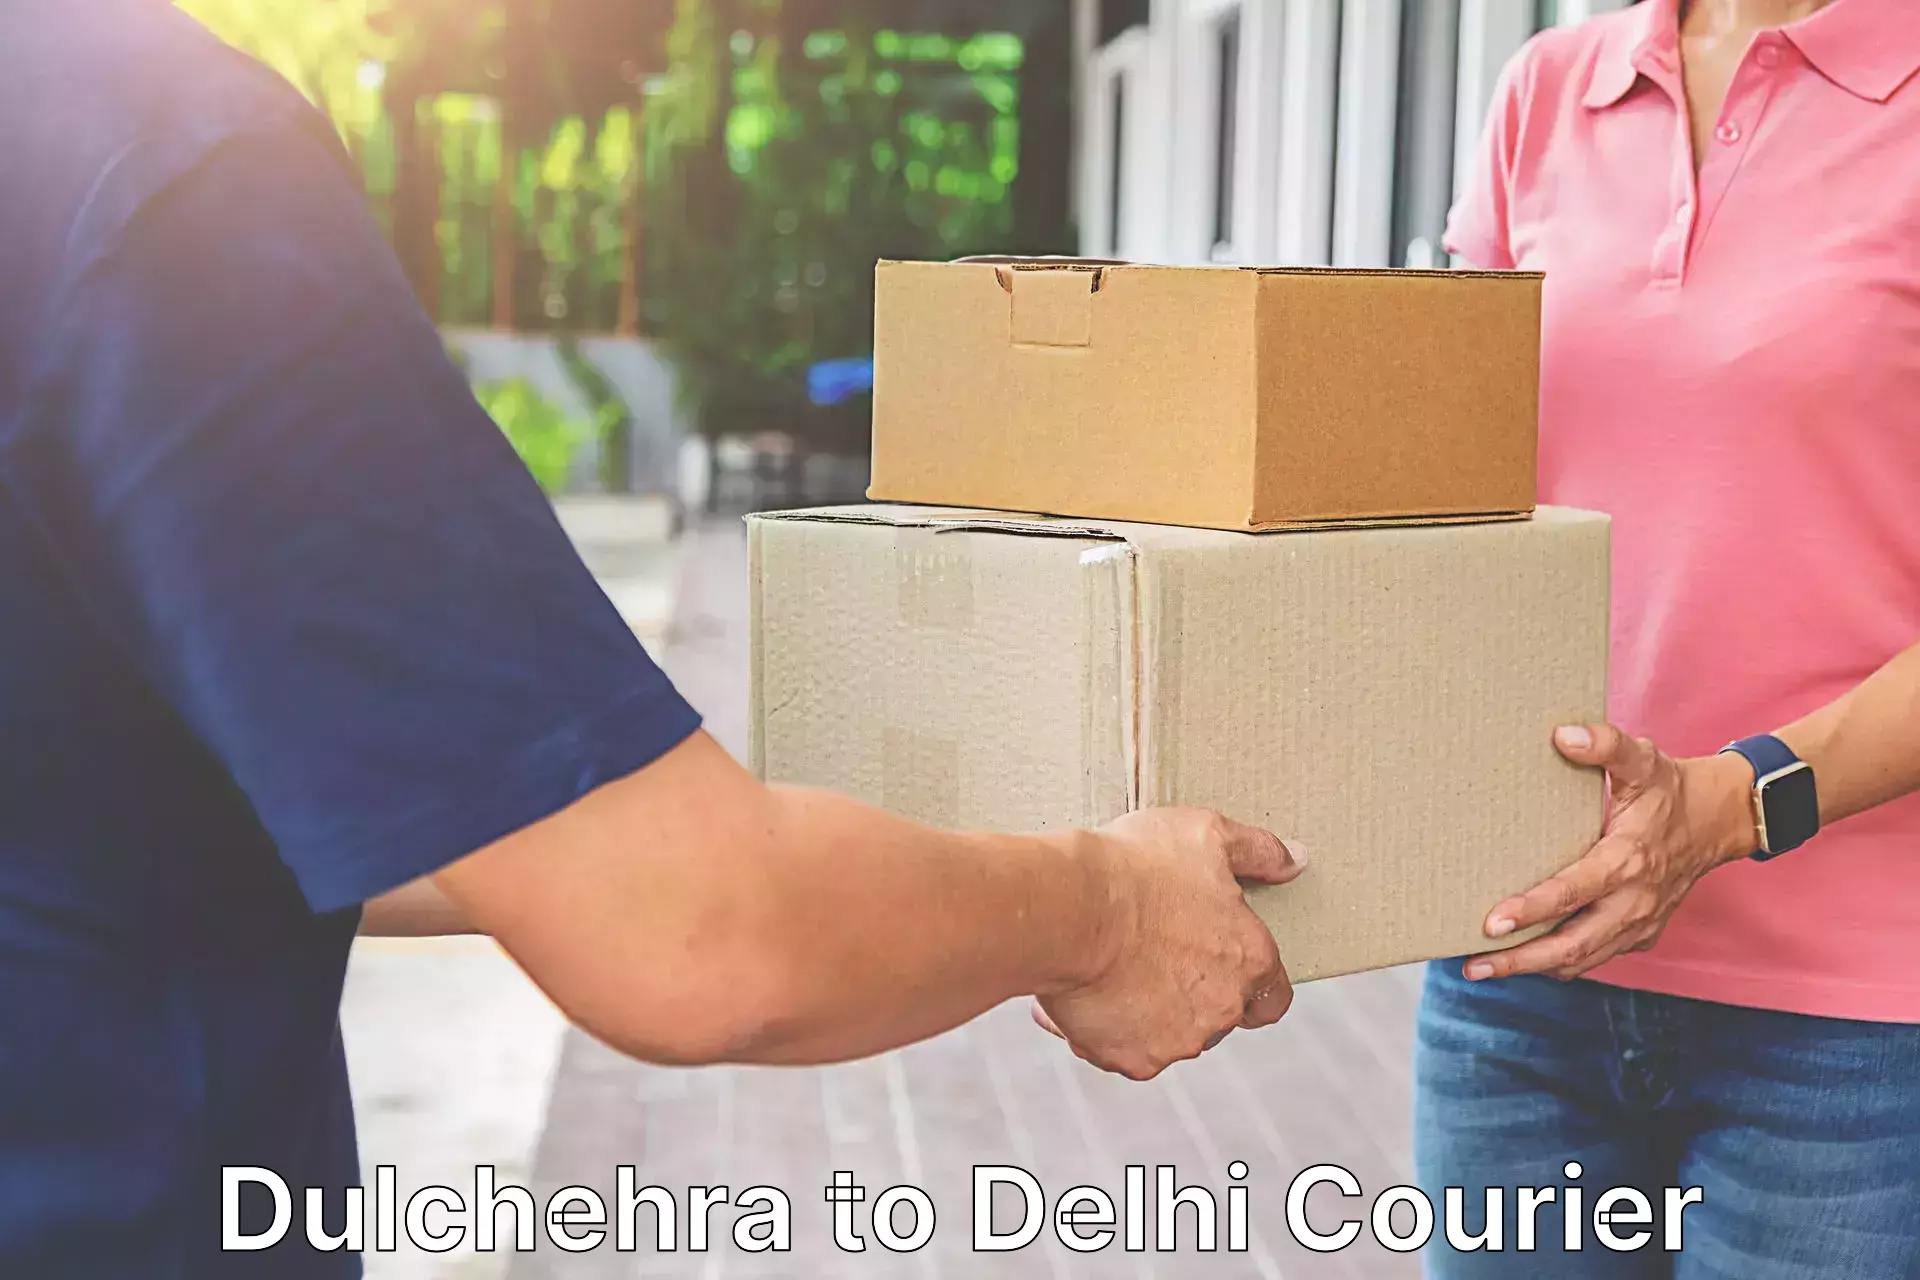 Efficient order fulfillment Dulchehra to University of Delhi